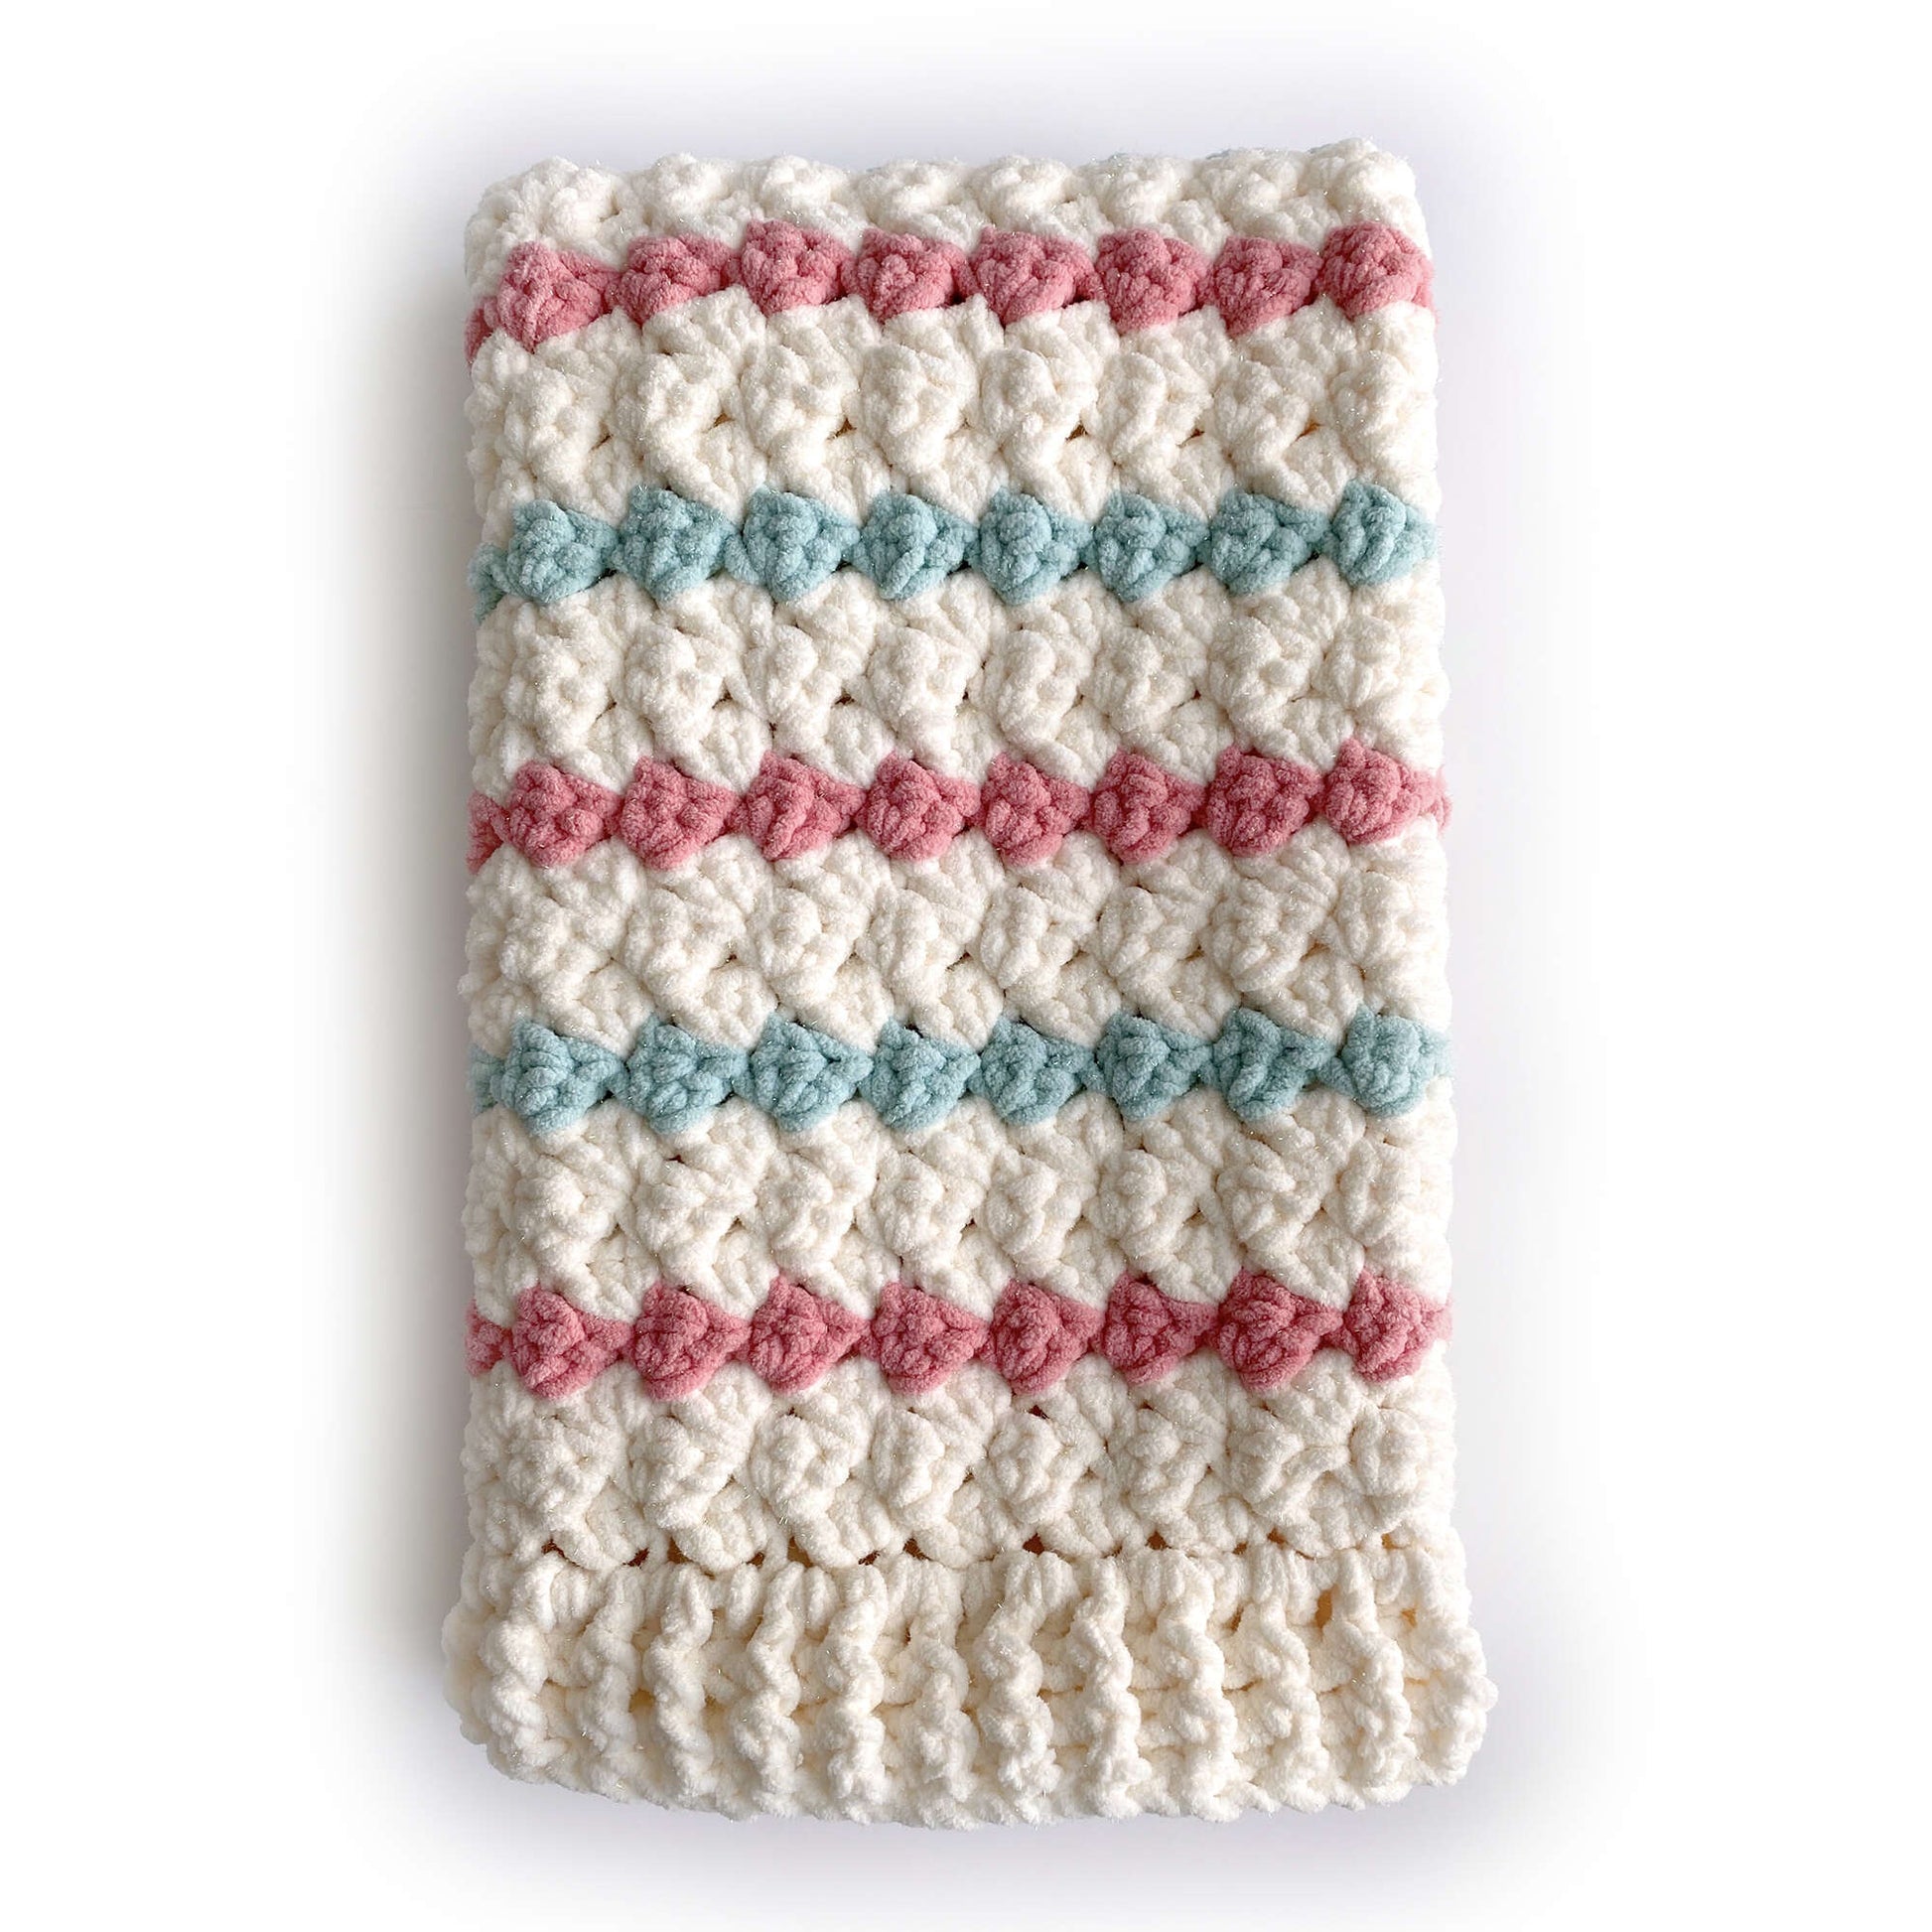 Free Crochet Patterns that use Bernat Baby Blanket Yarn - Stitch11